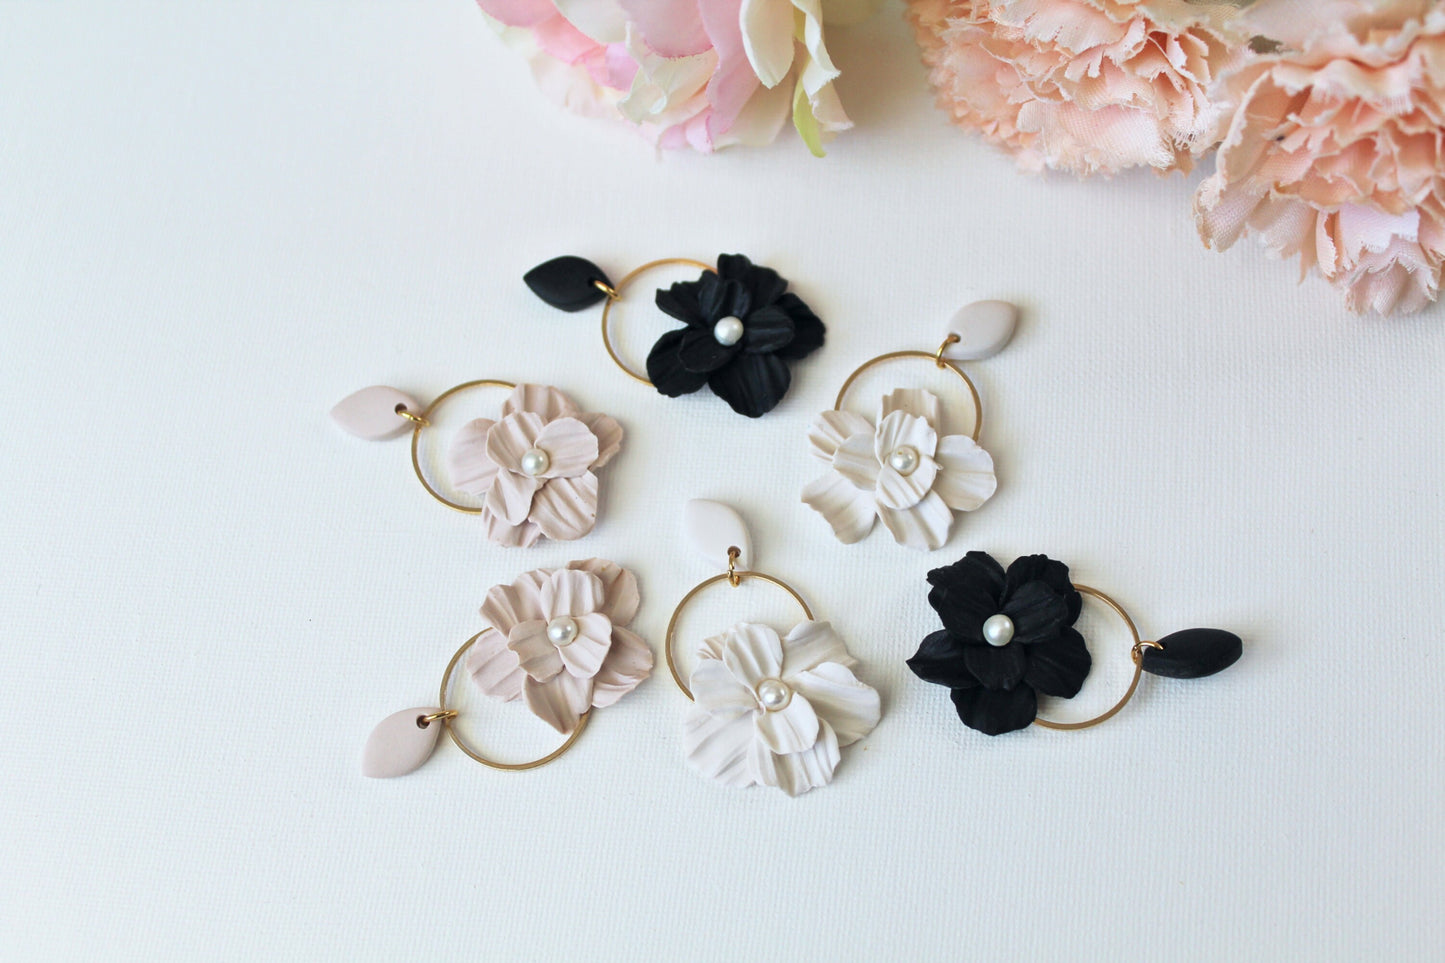 Flower Earrings, Polymer Clay Earrings, Clay Earrings, Floral Earrings, Neutral, Beige, White, Black Earrings, Statement Earrings, Handmade